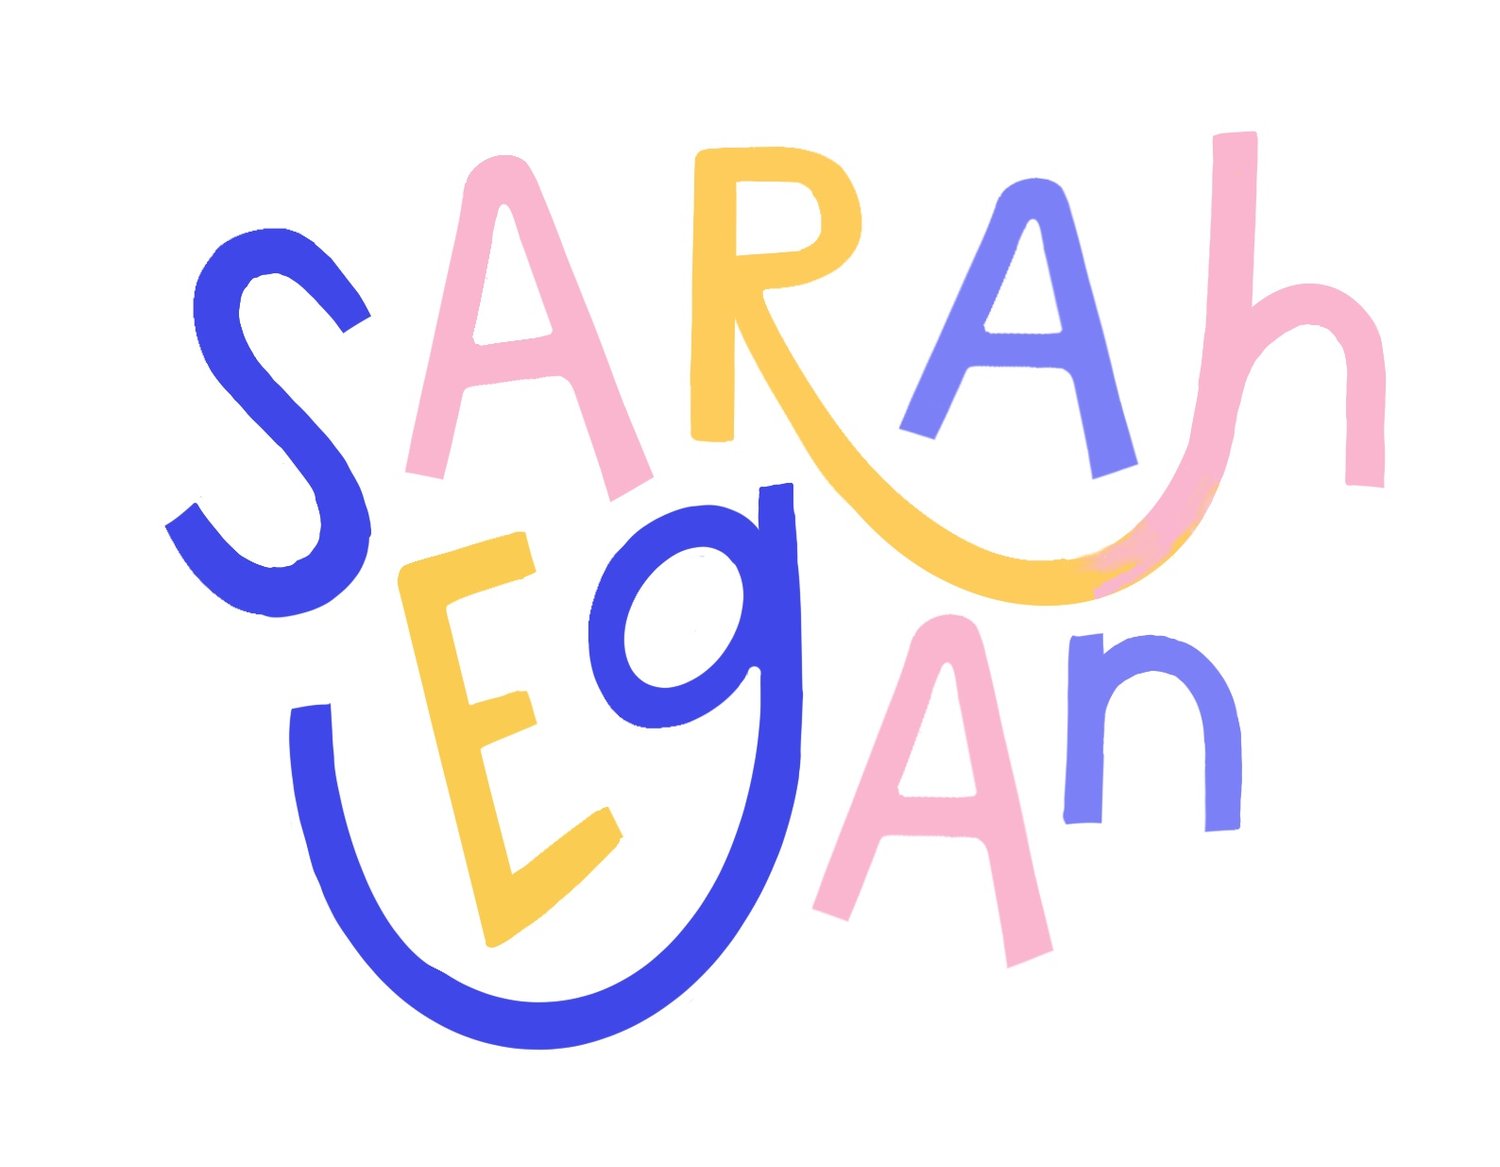 Sarah Egan